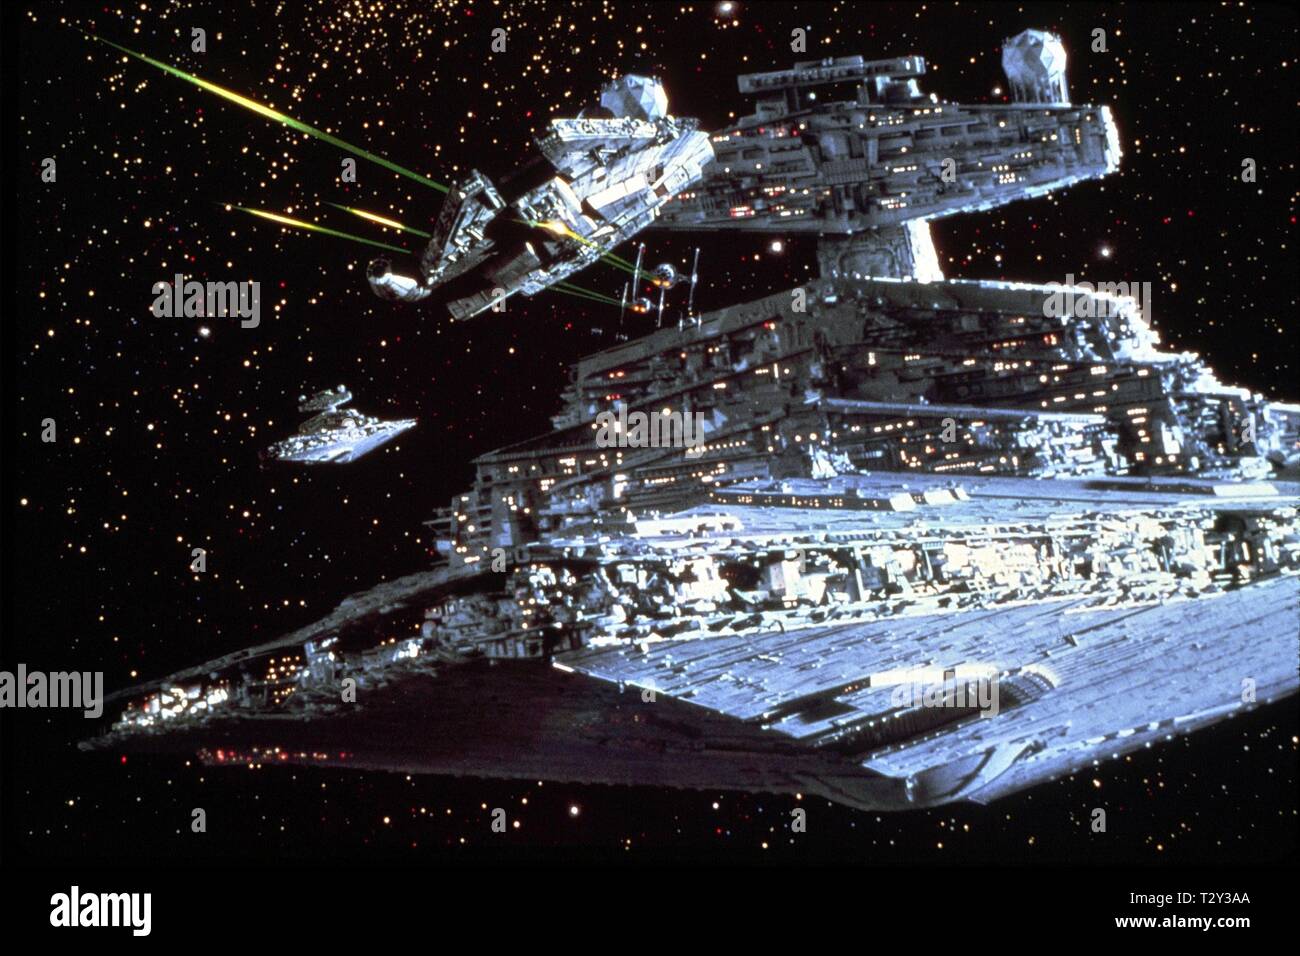 star-destroyer-star-wars-episode-v-the-empire-strikes-back-1980-T2Y3AA.jpg